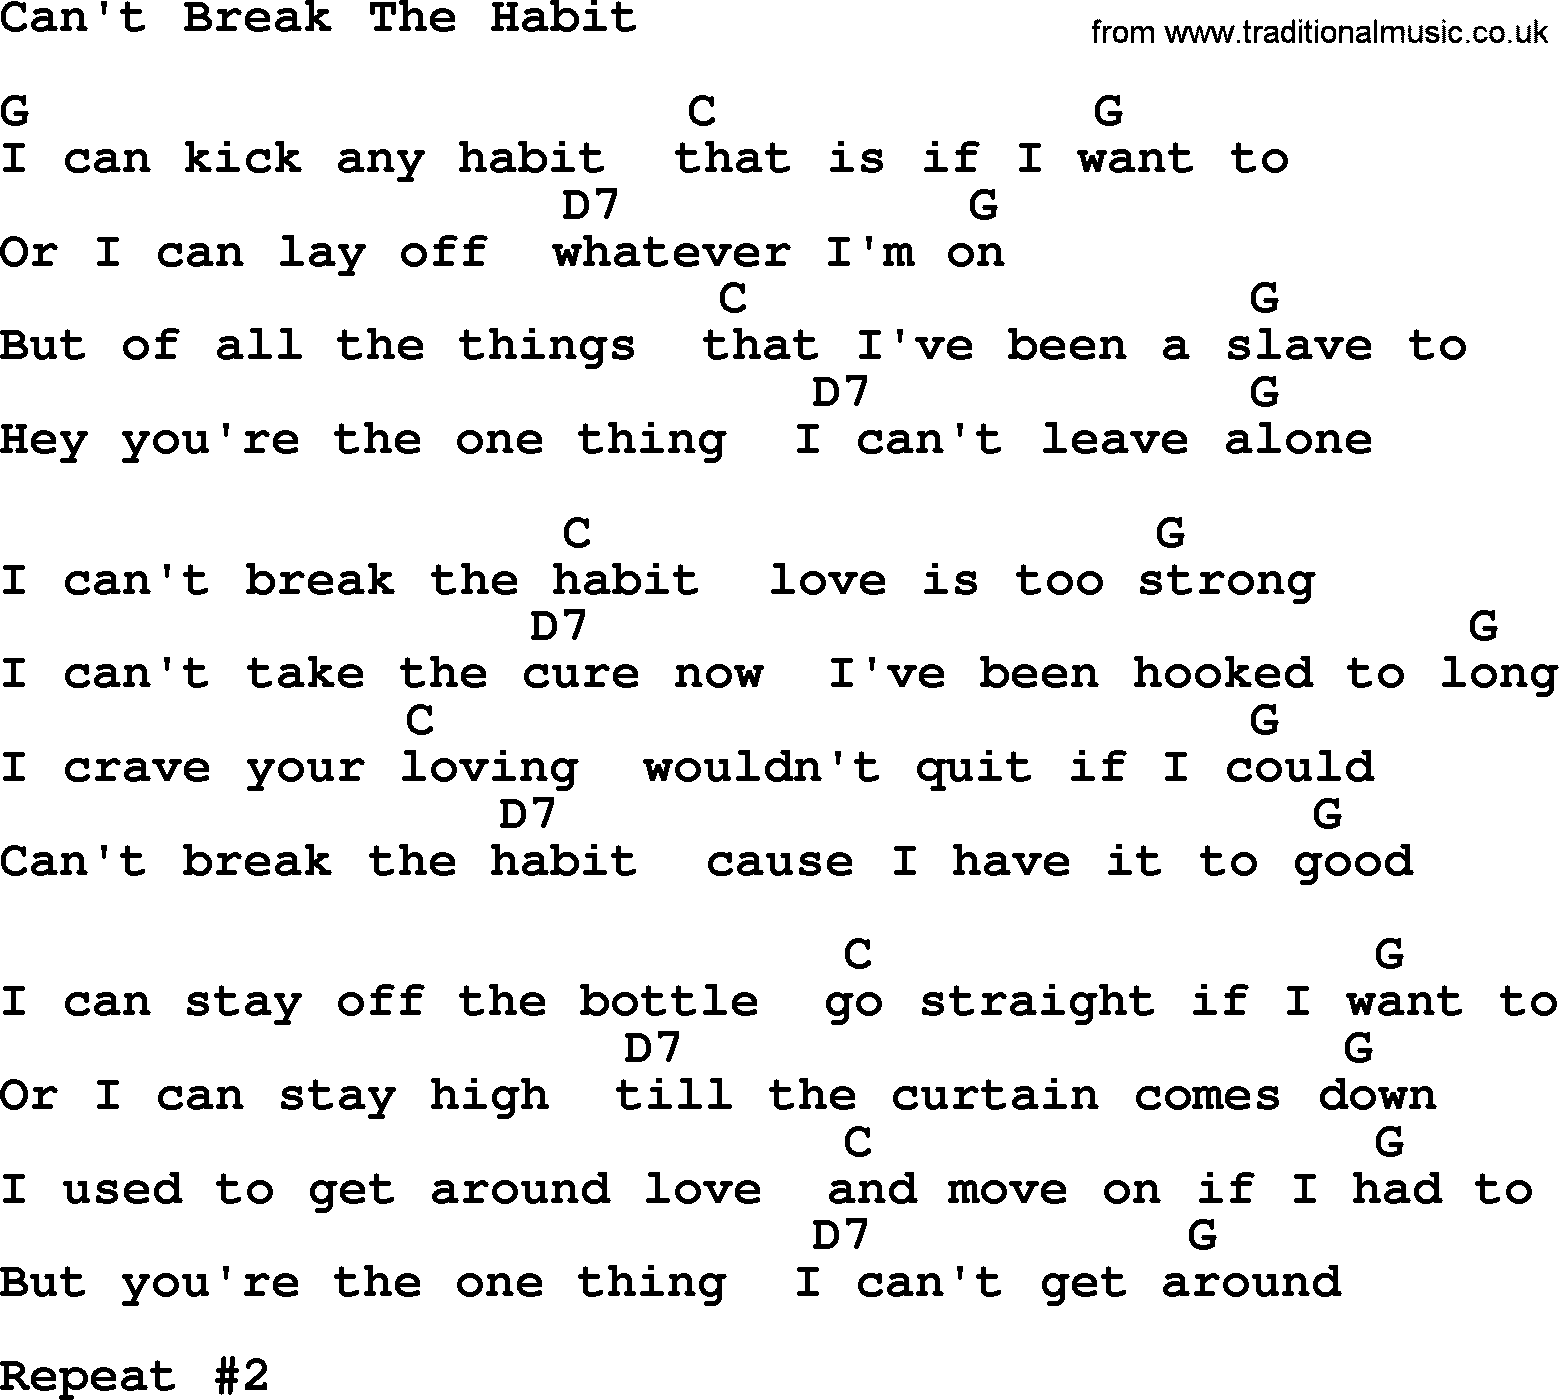 Merle Haggard song: Can't Break The Habit, lyrics and chords